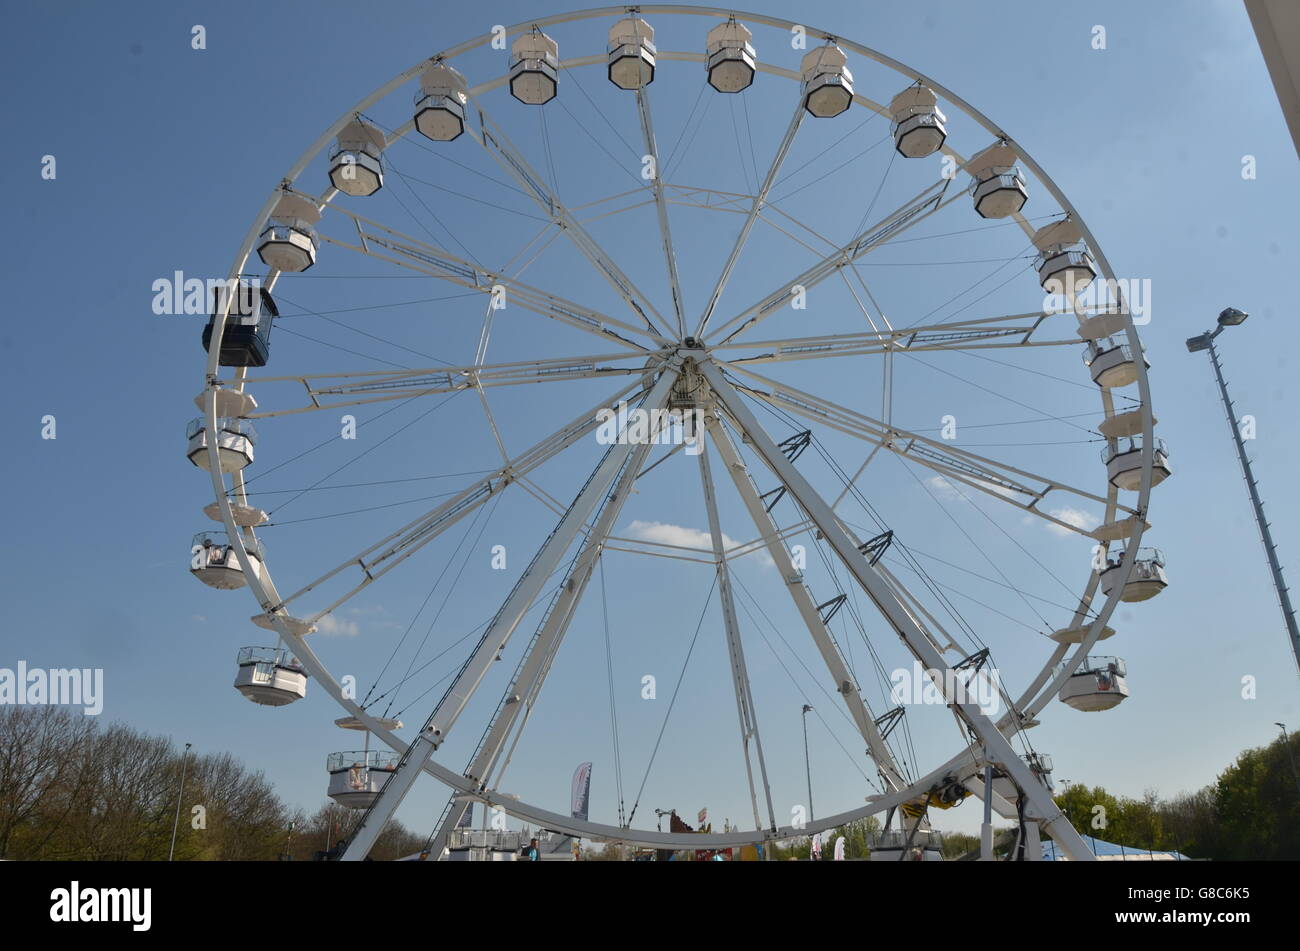 wheel, color, park, ride, fair, view, day, metal, Stock Photo